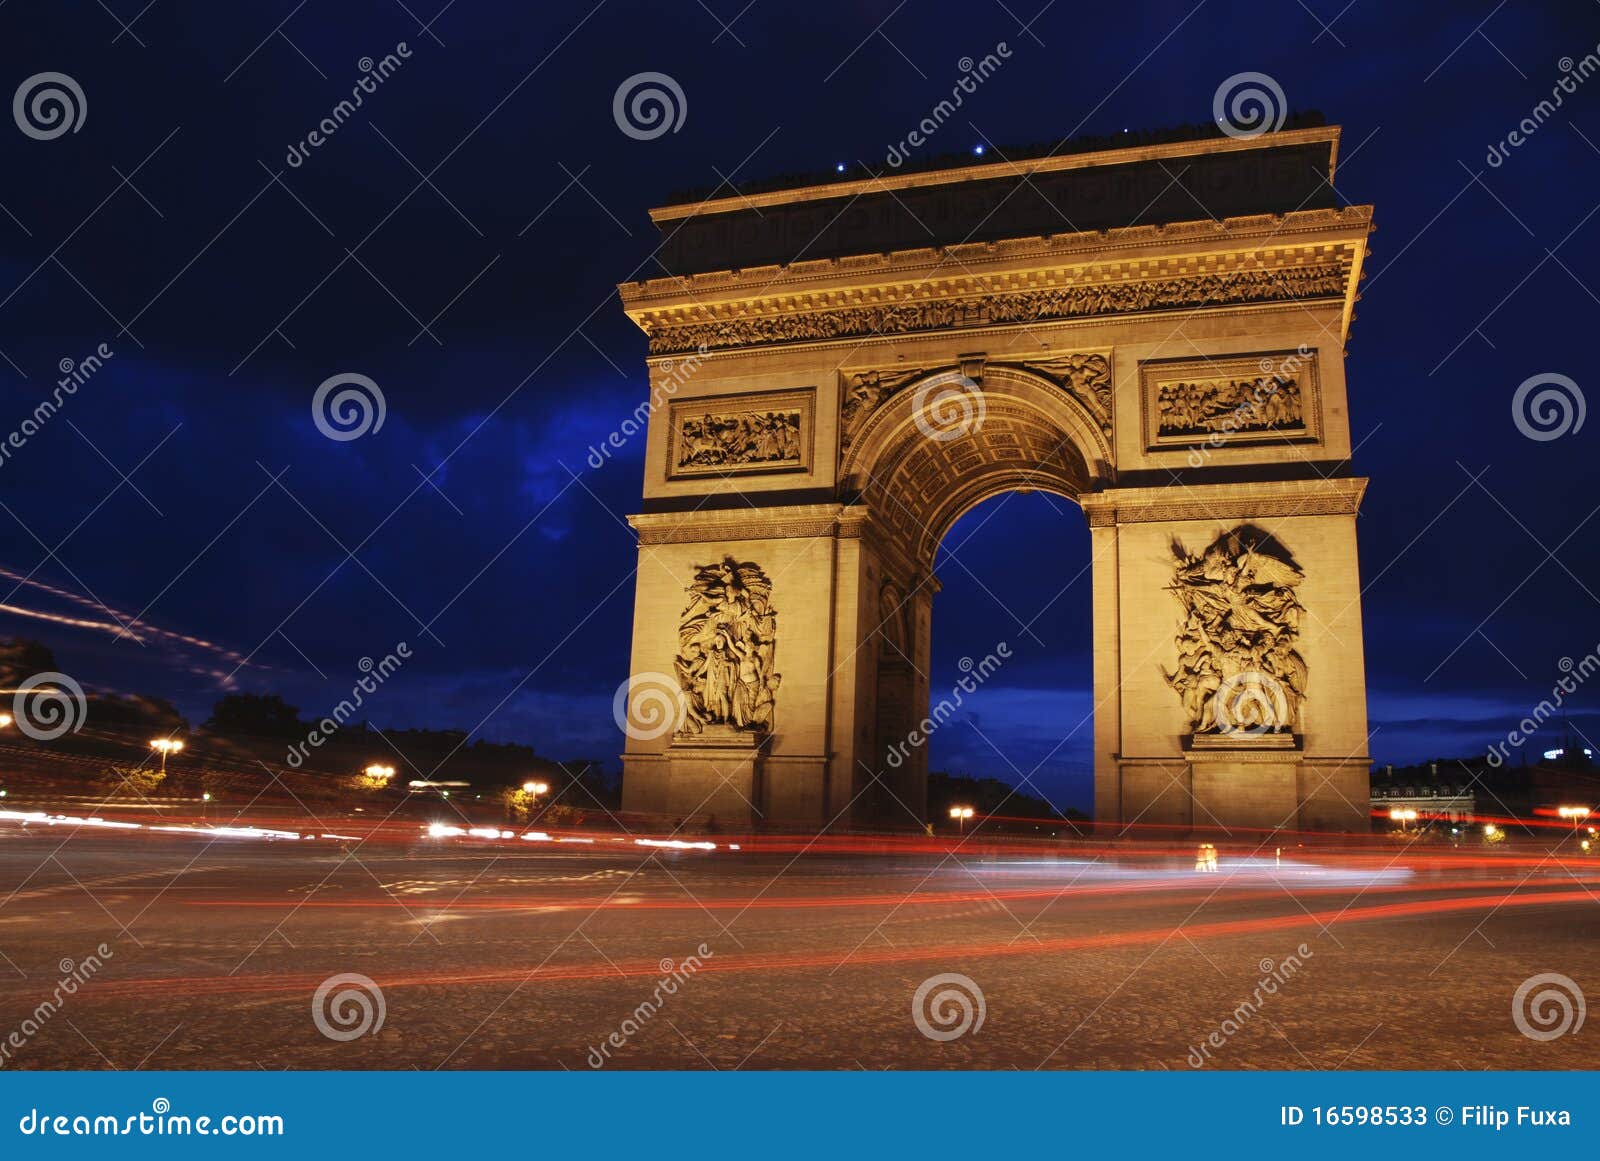 triumph arch at night